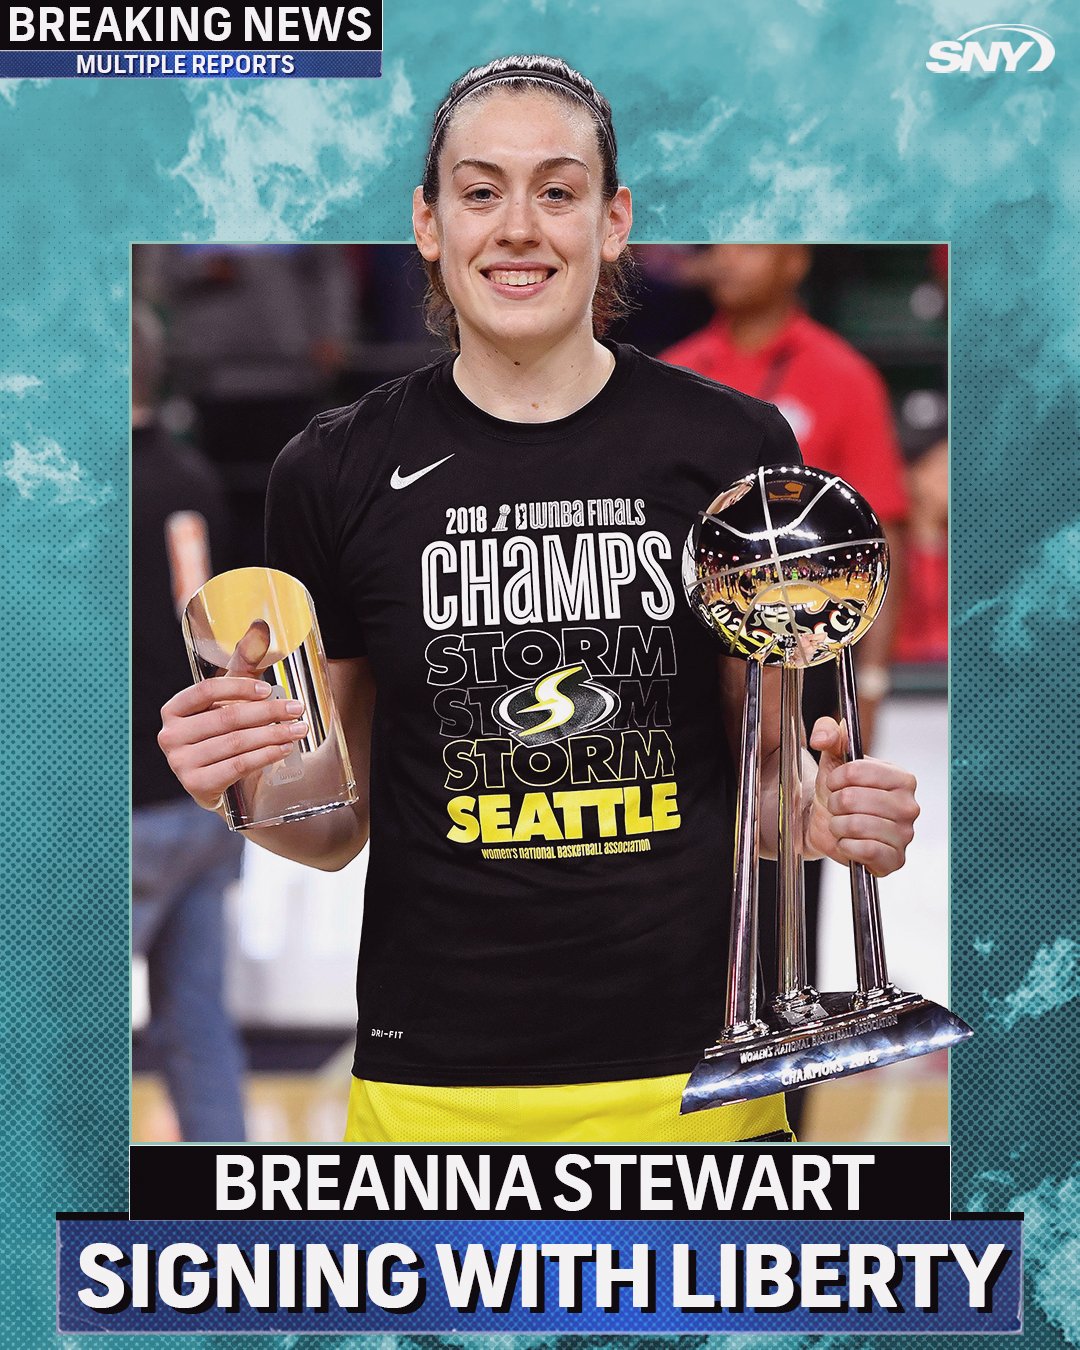 UConn legend Breanna Stewart signing with WNBA's New York Liberty